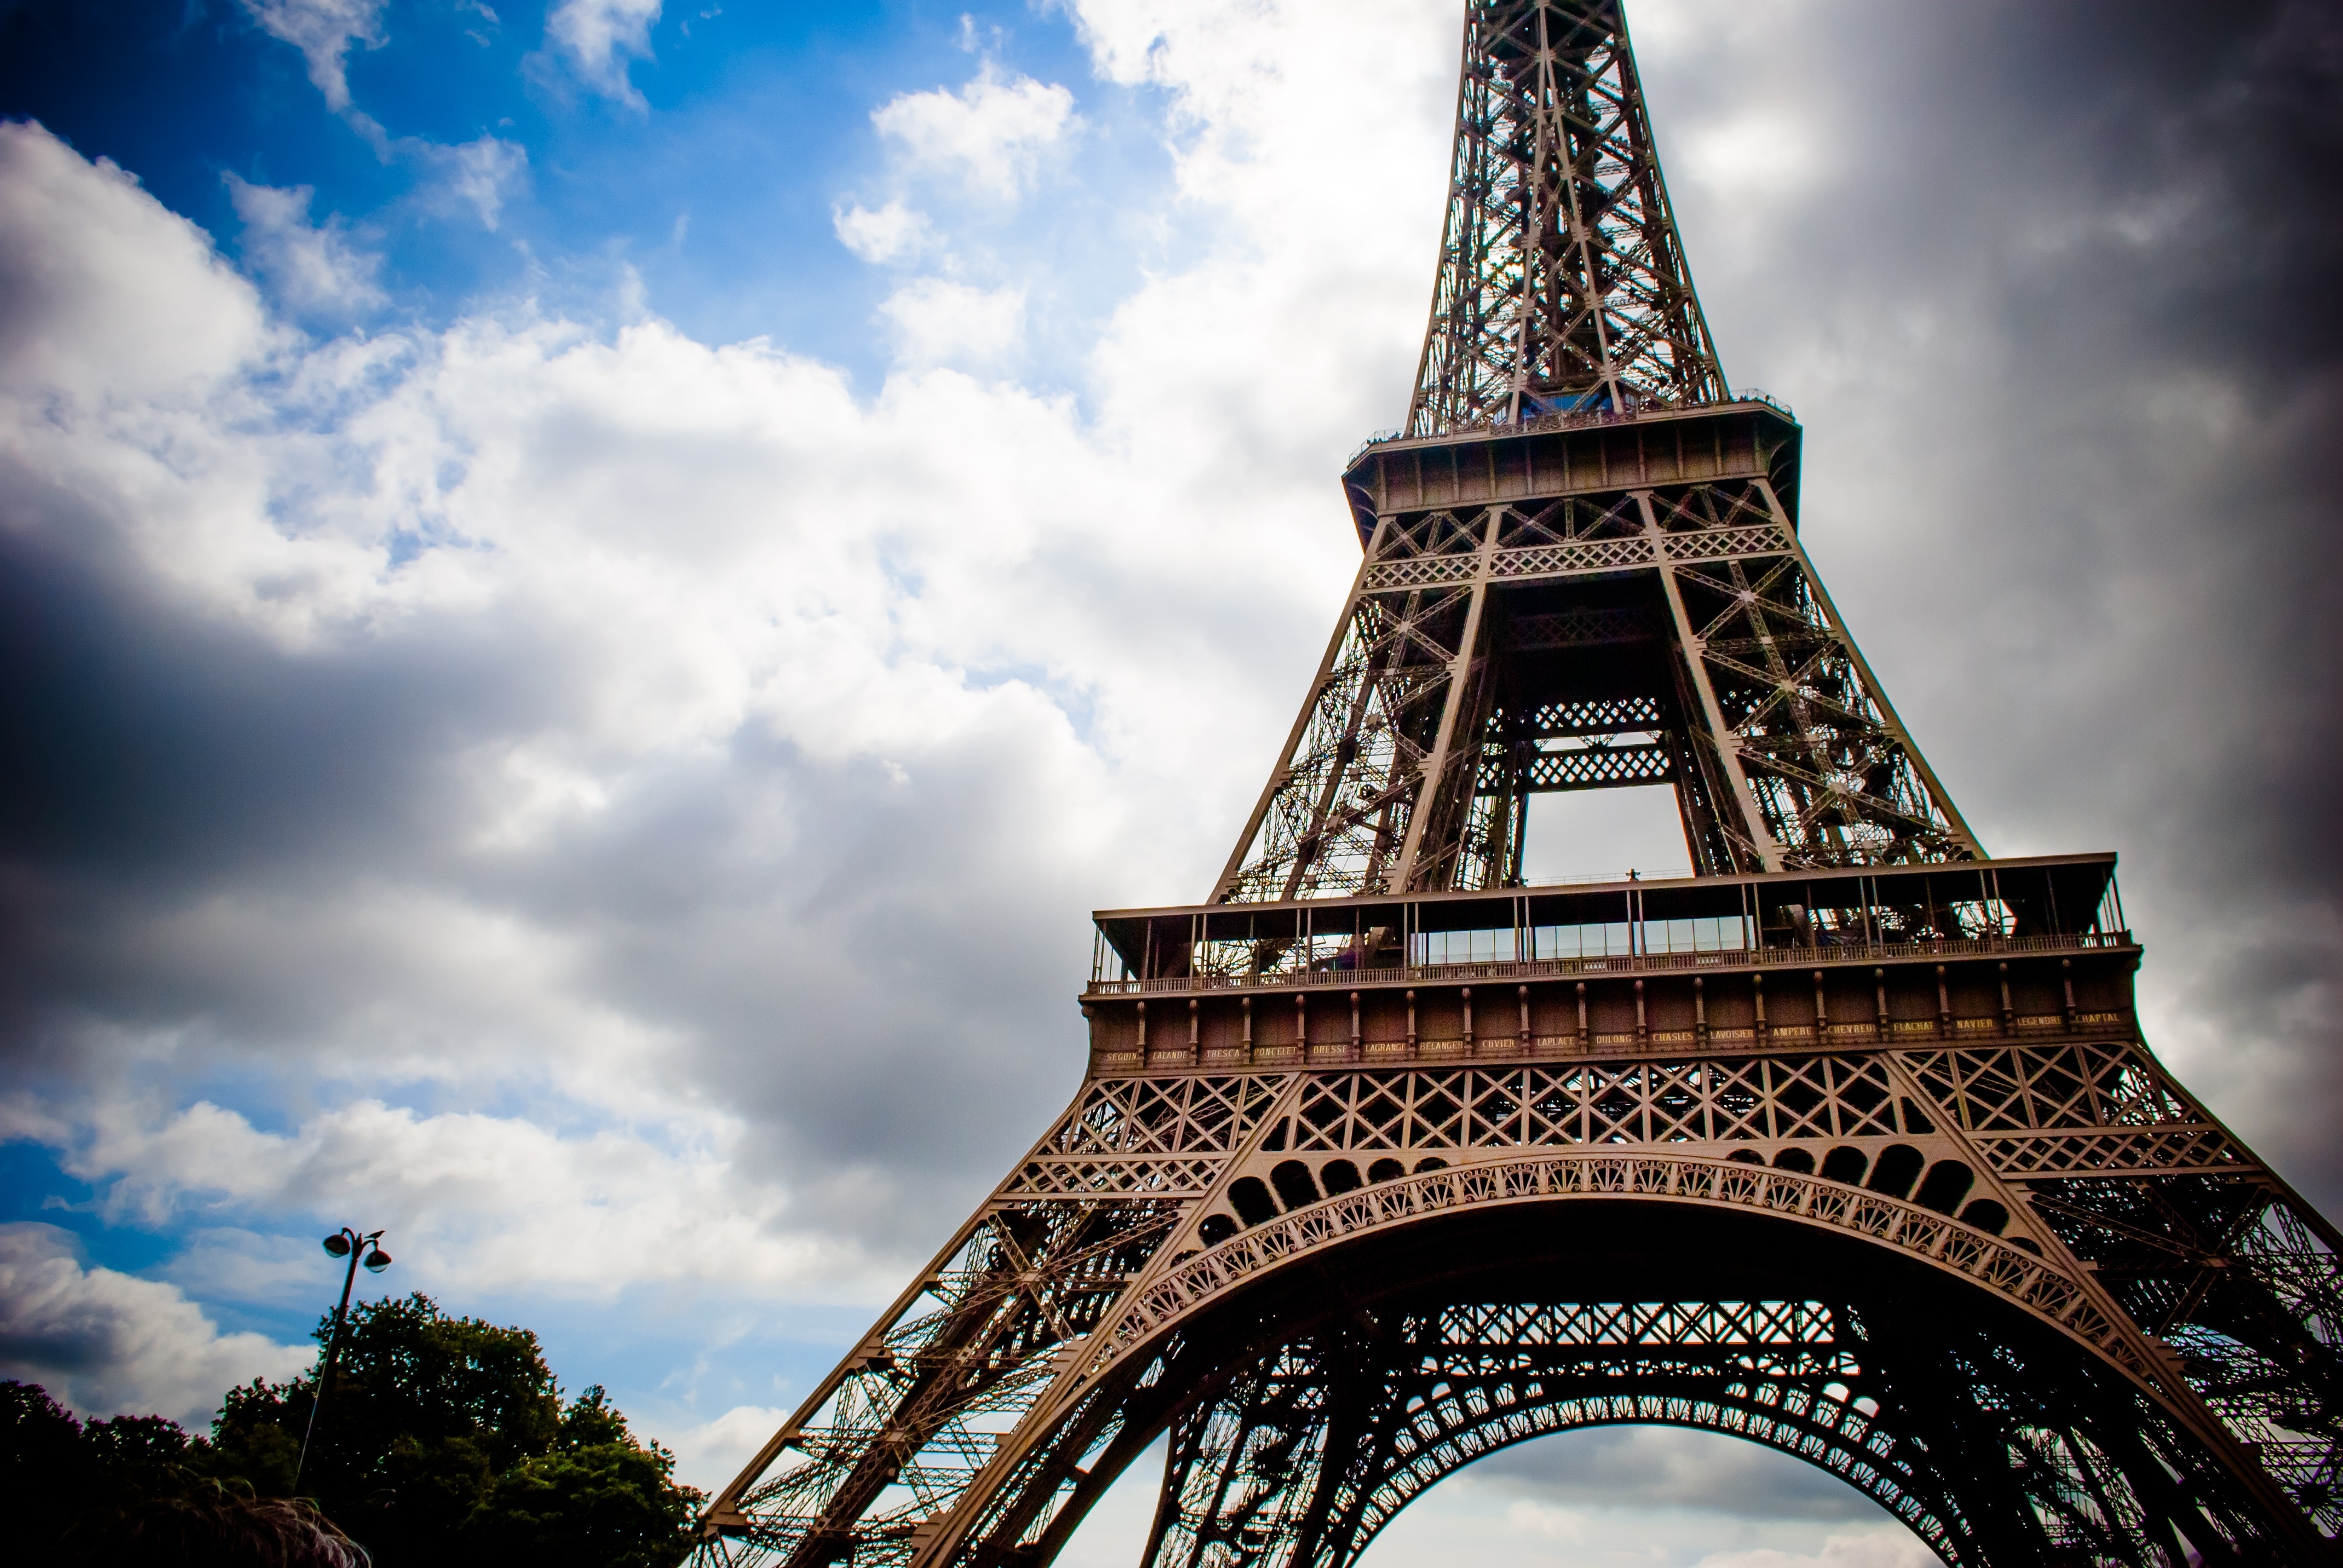 France, Eiffel Tower, Perspective, Paris, tower, travel destinations